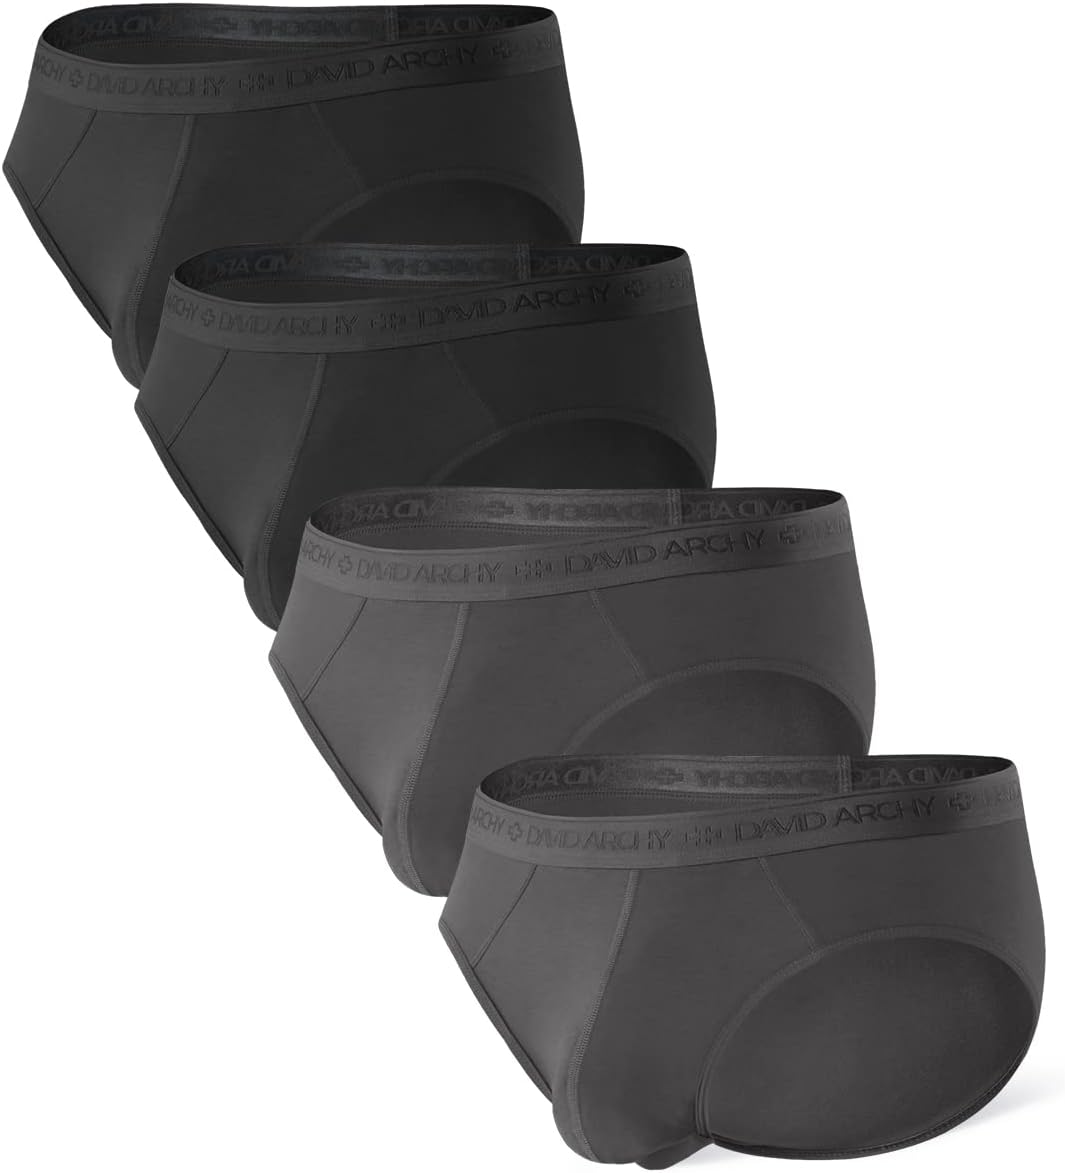 David Archy 4 Packs Briefs Separate Pouch Modal Breathable Long Boxer Briefs  S M L XL